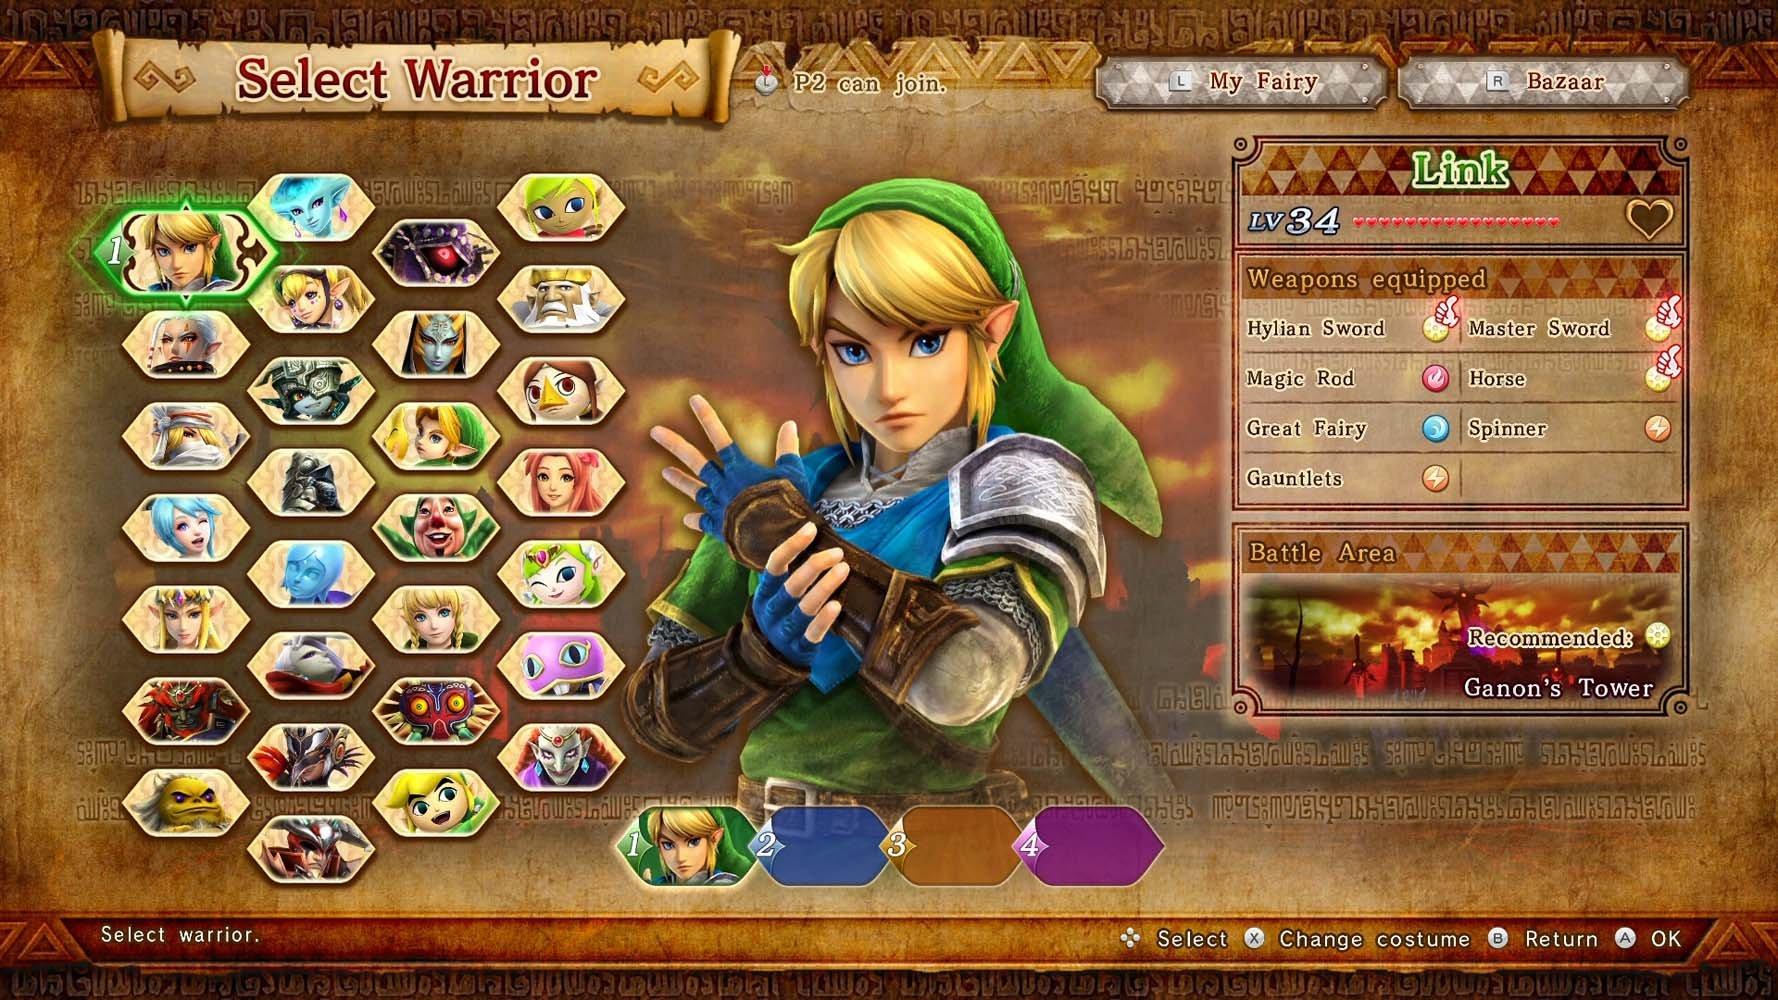 Guía Hyrule Warriors: Definitive Edition (Nintendo Switch)